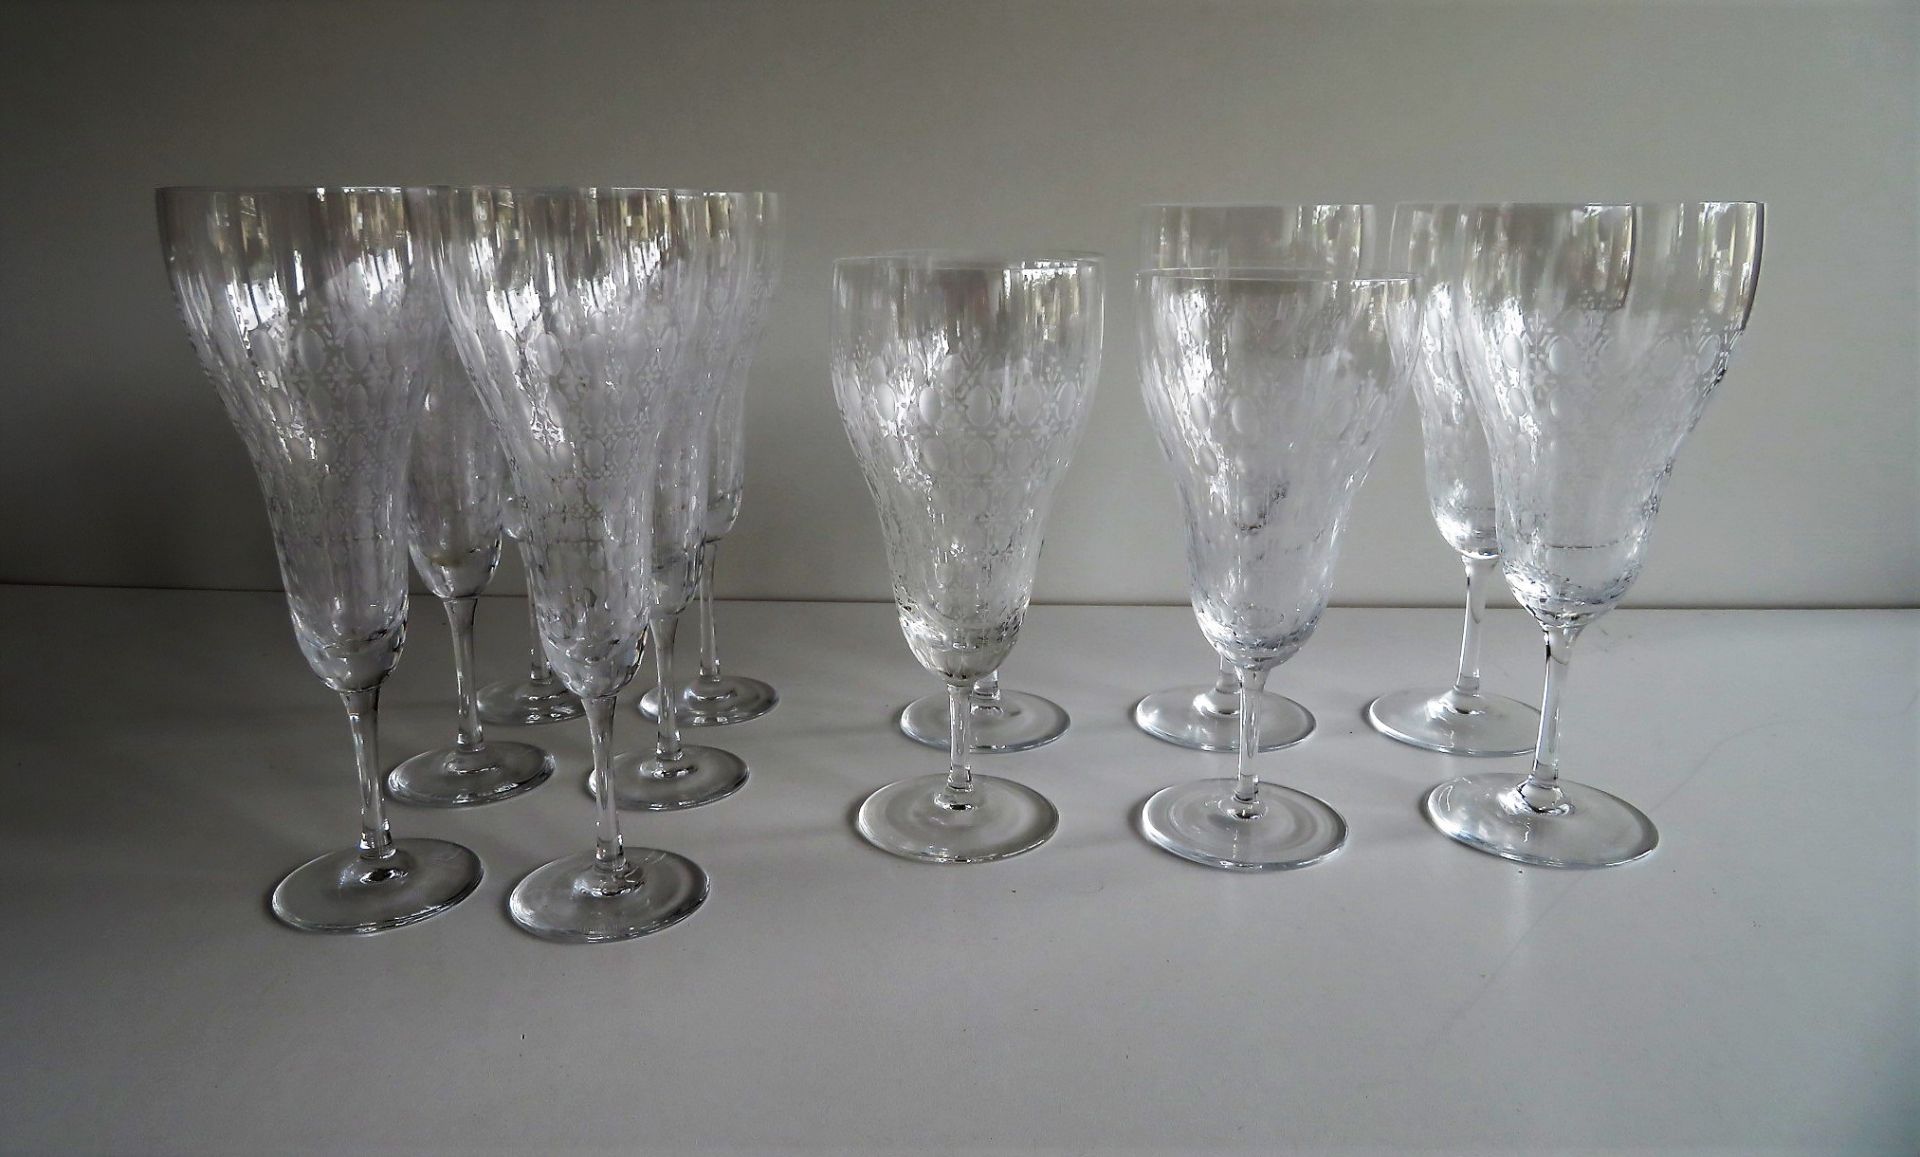 30 teiliges Glas-Set, Rosenthal, Modell Romanze, Björn Wiinblad (1918 - 2006), farbloses